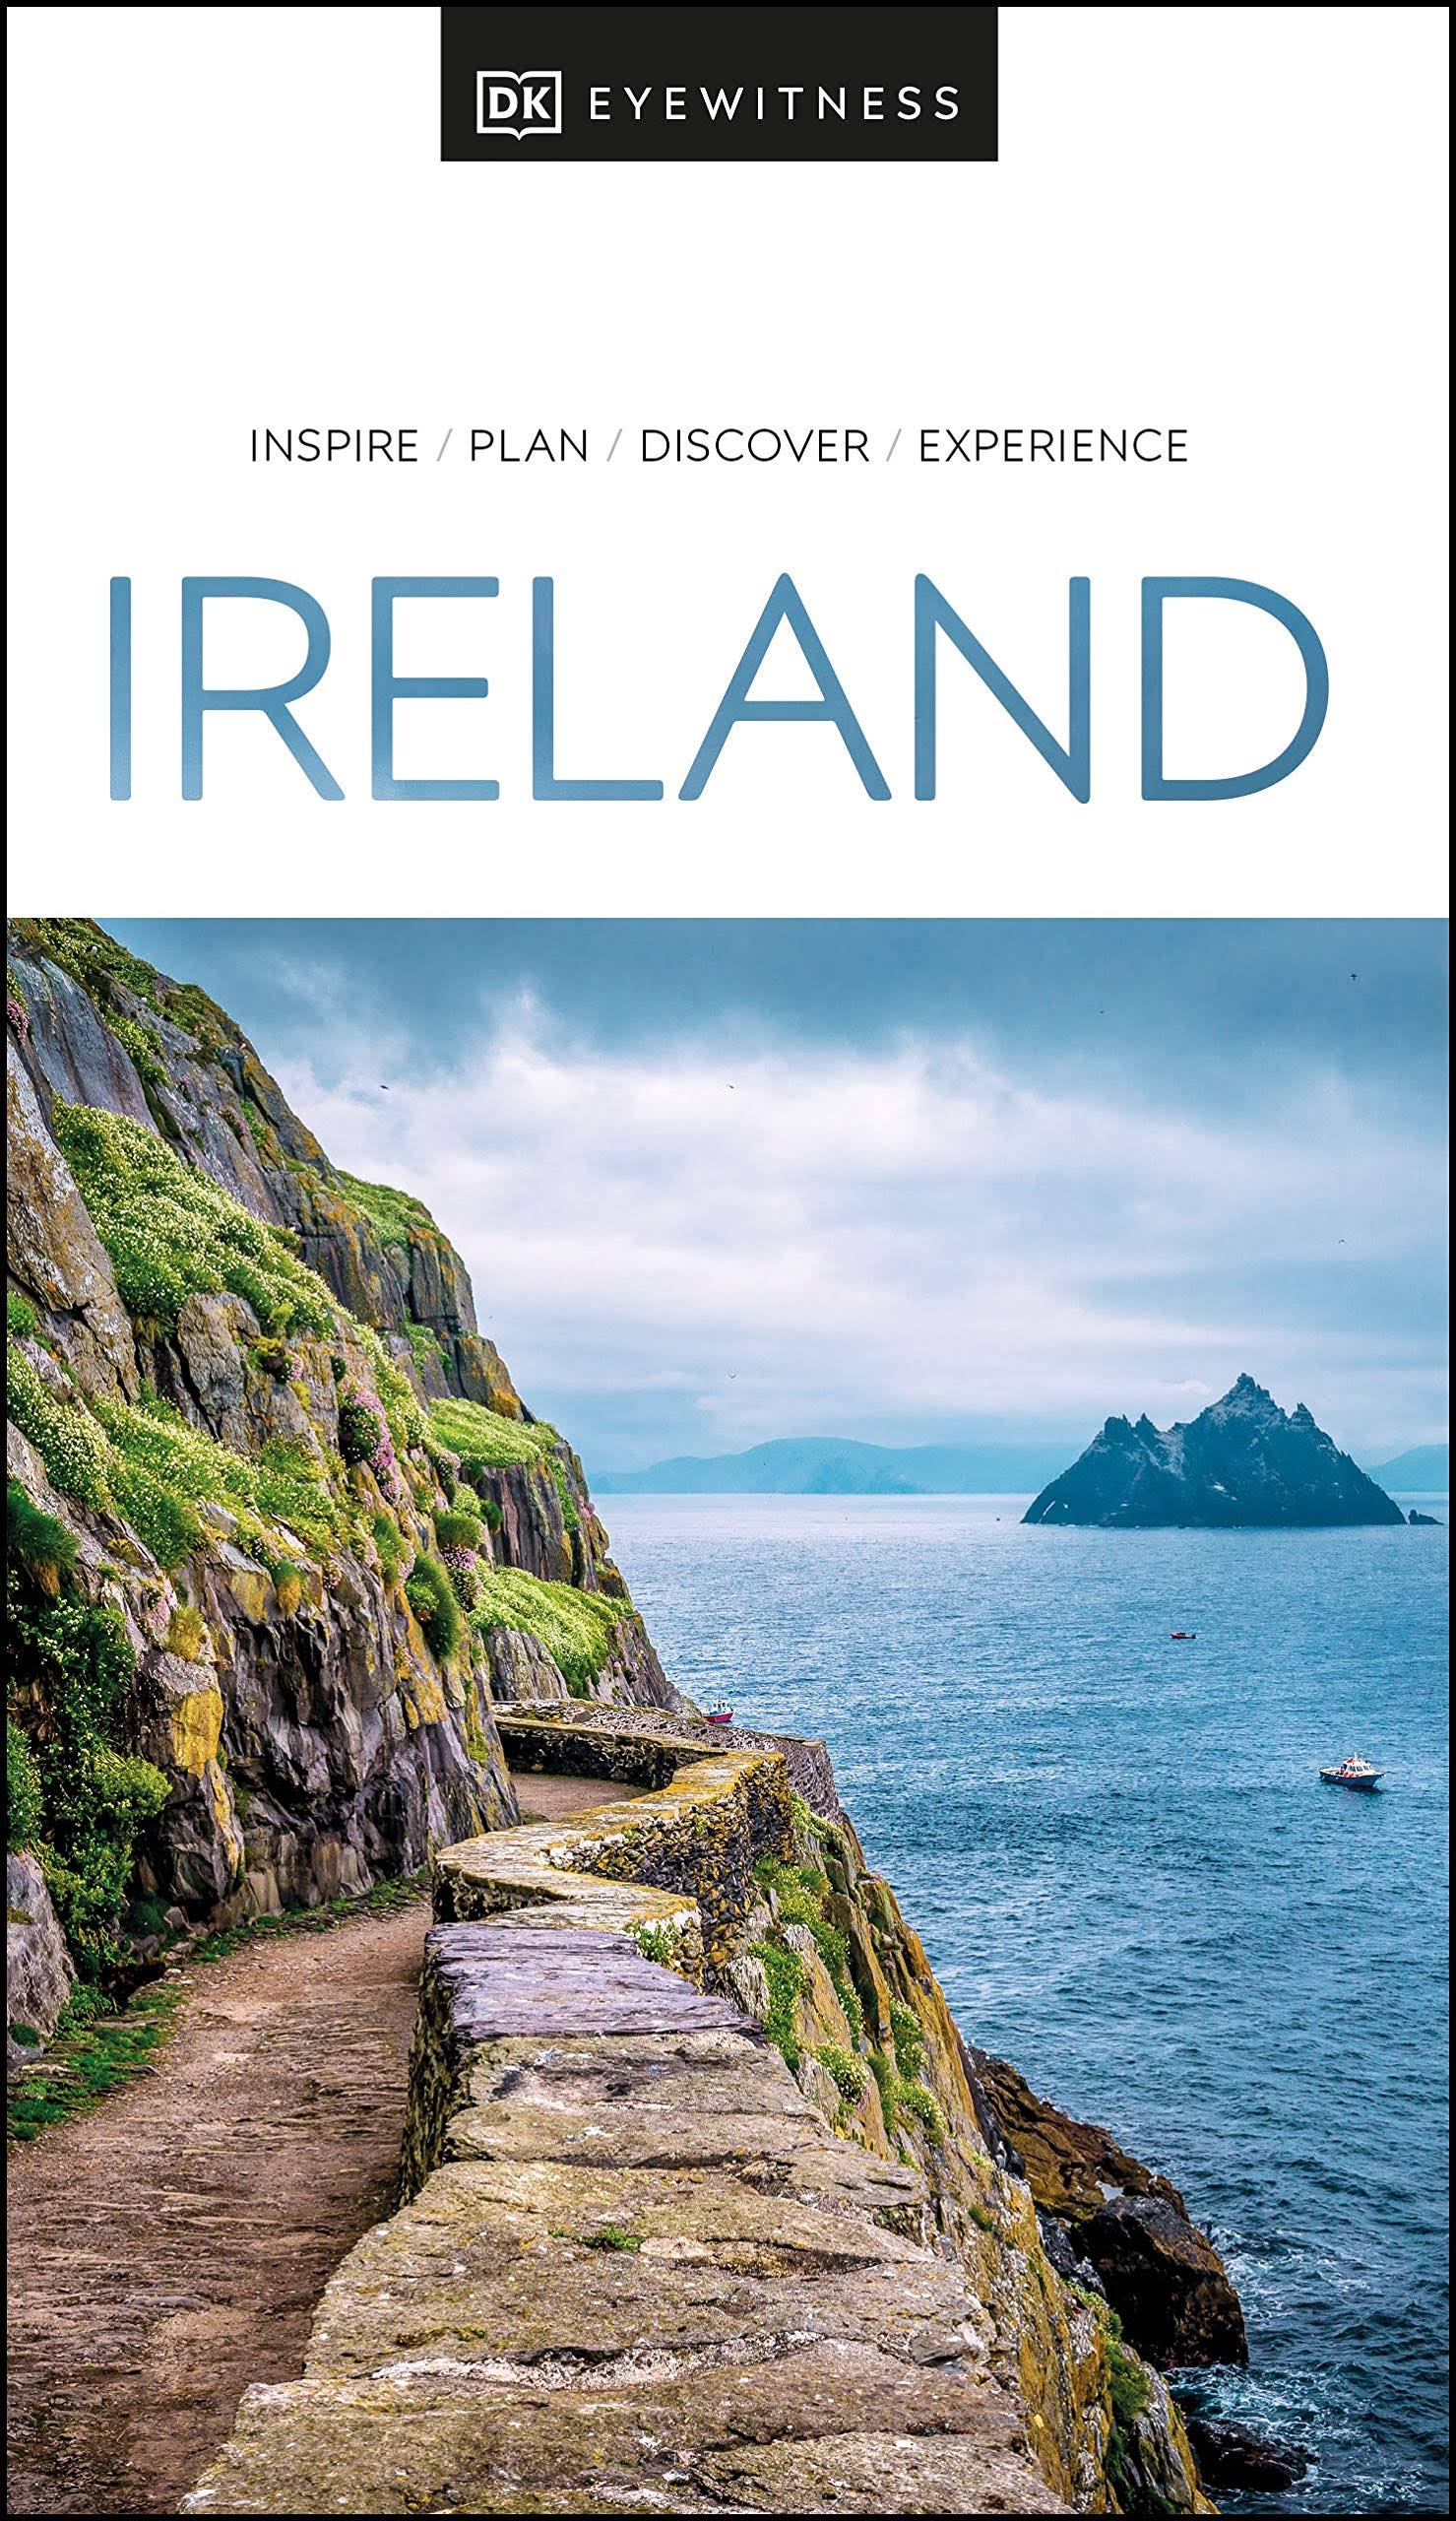 DK Eyewitness Ireland [Book]